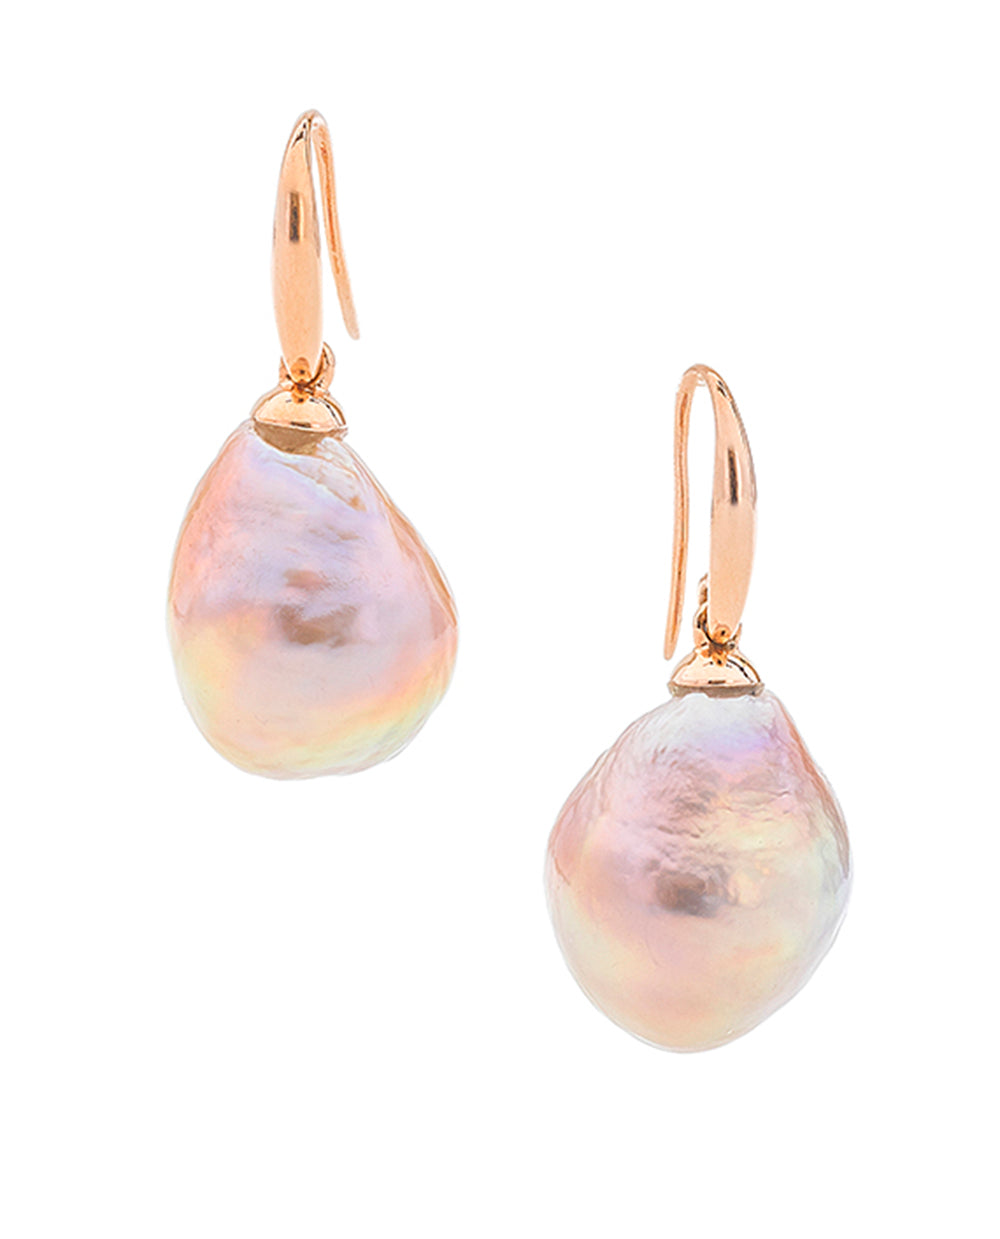 9k Rose Gold Natural Pink Edison Freshwater Pearl Shepherd Hook Earrings